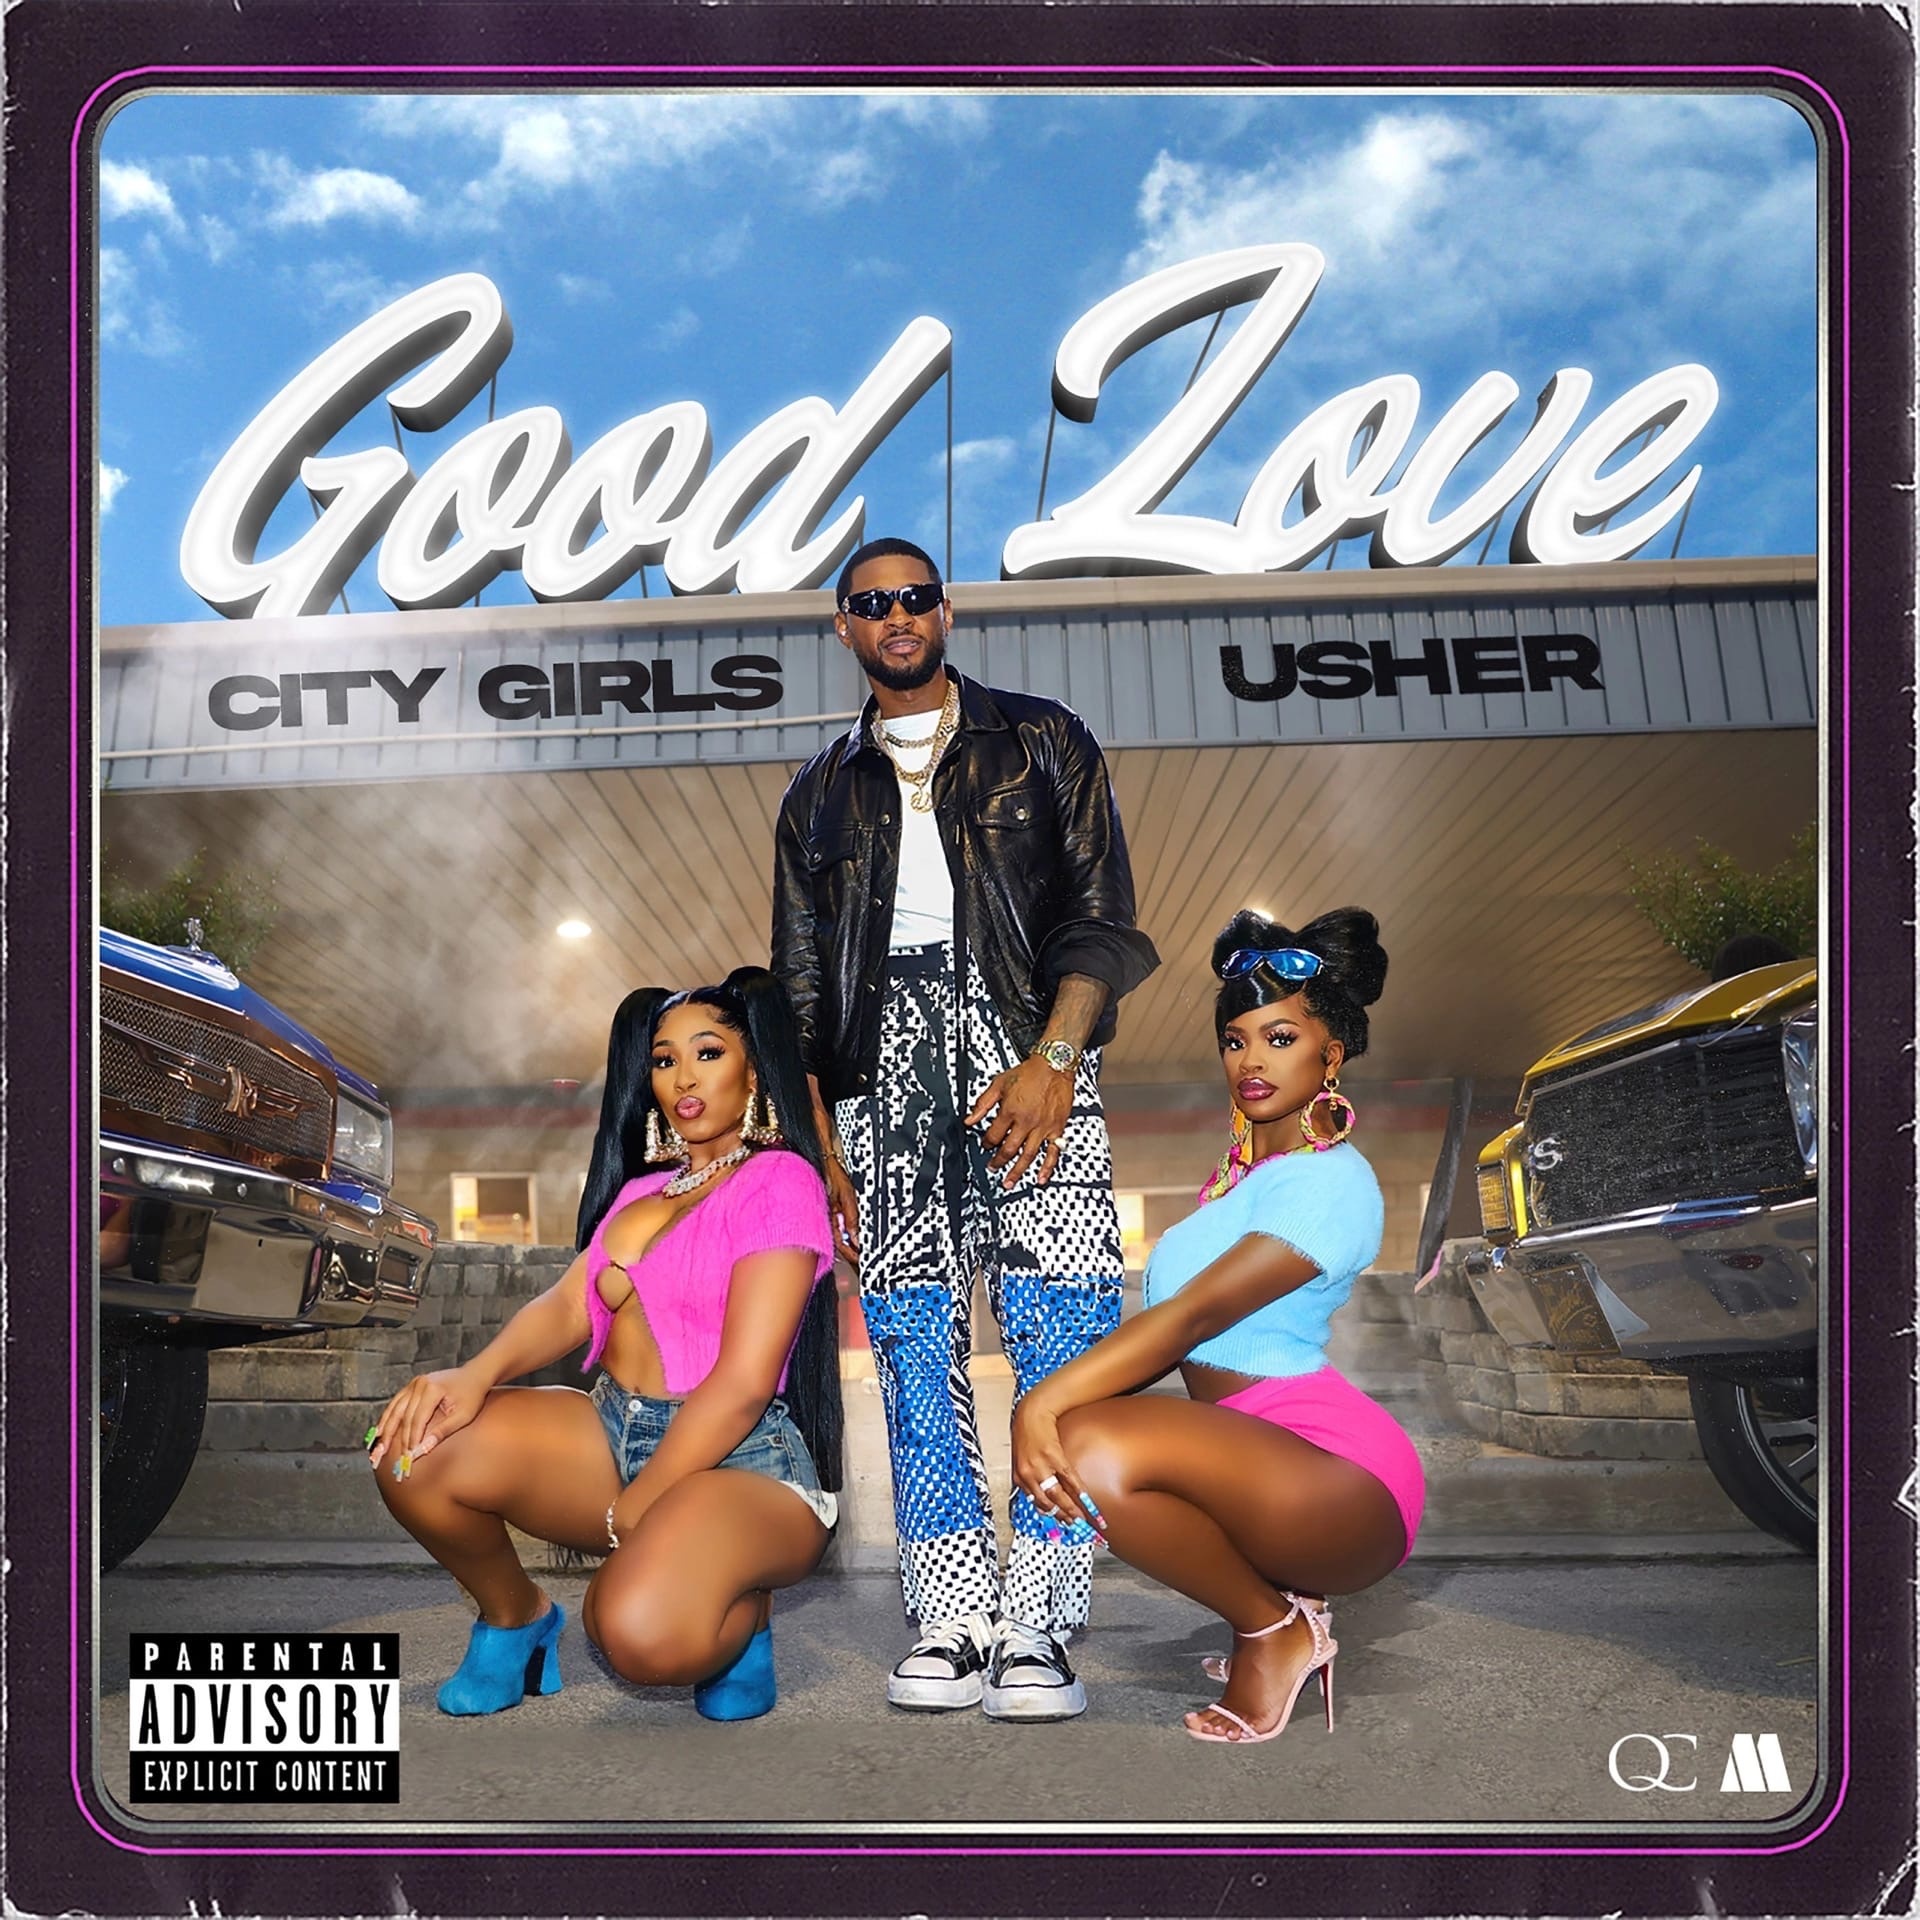 City Girls featuring USHER — Good Love cover artwork